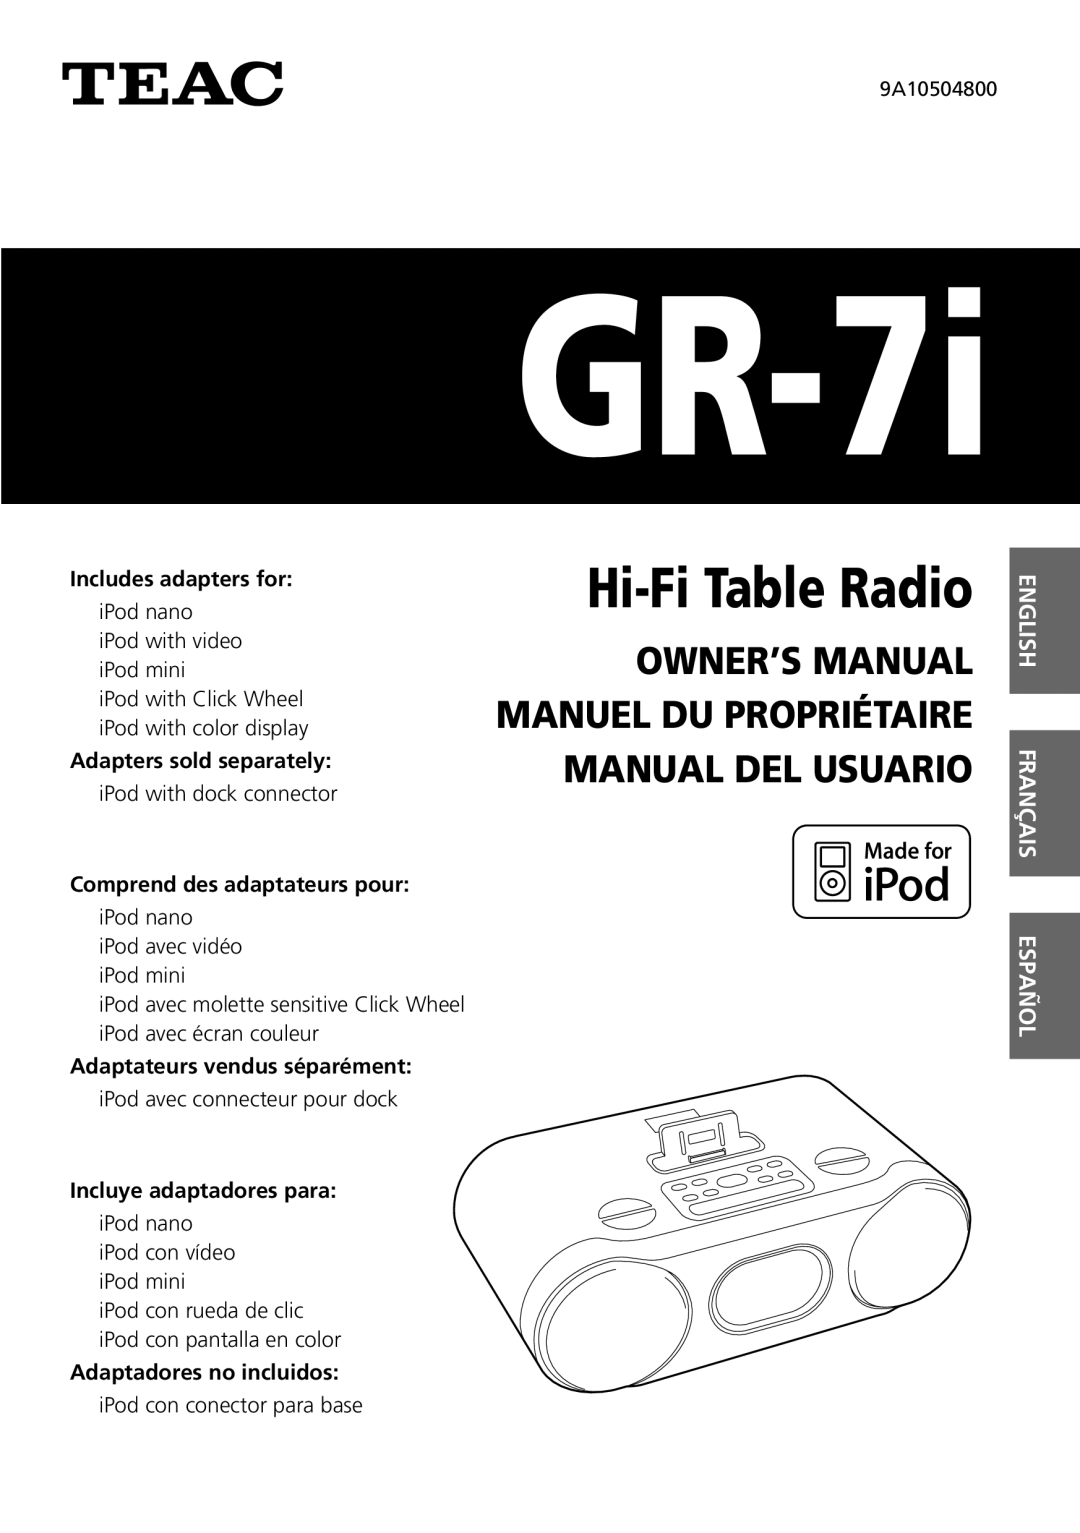 Teac GR-7i owner manual Hi-FiTable Radio 